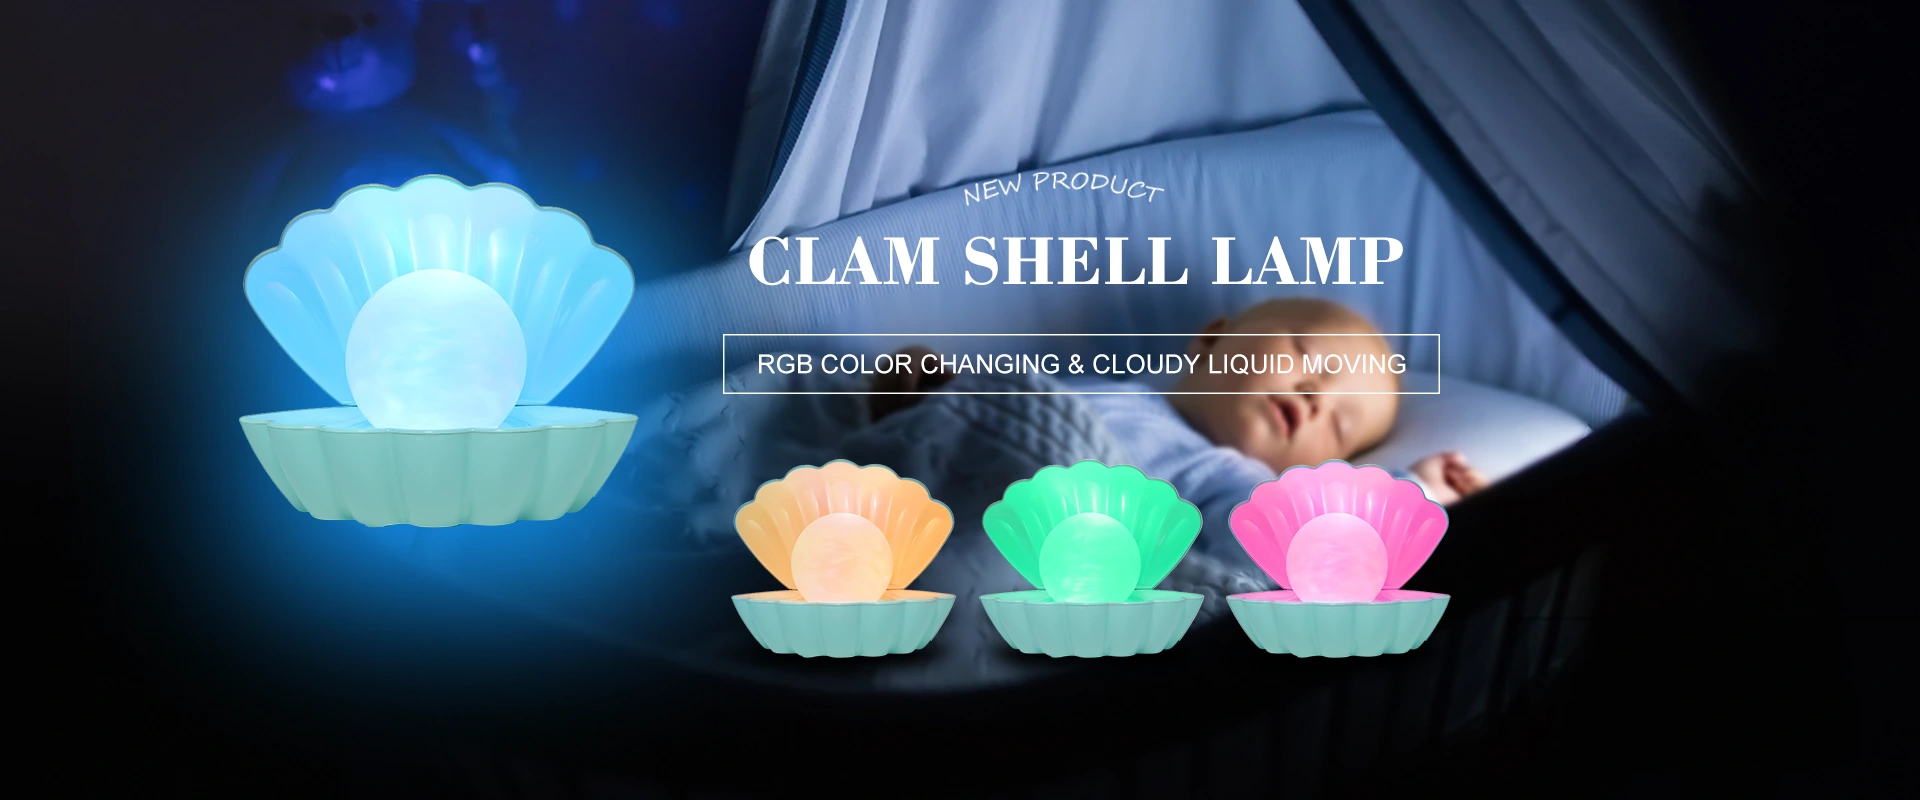 Clamp Lamp Factory